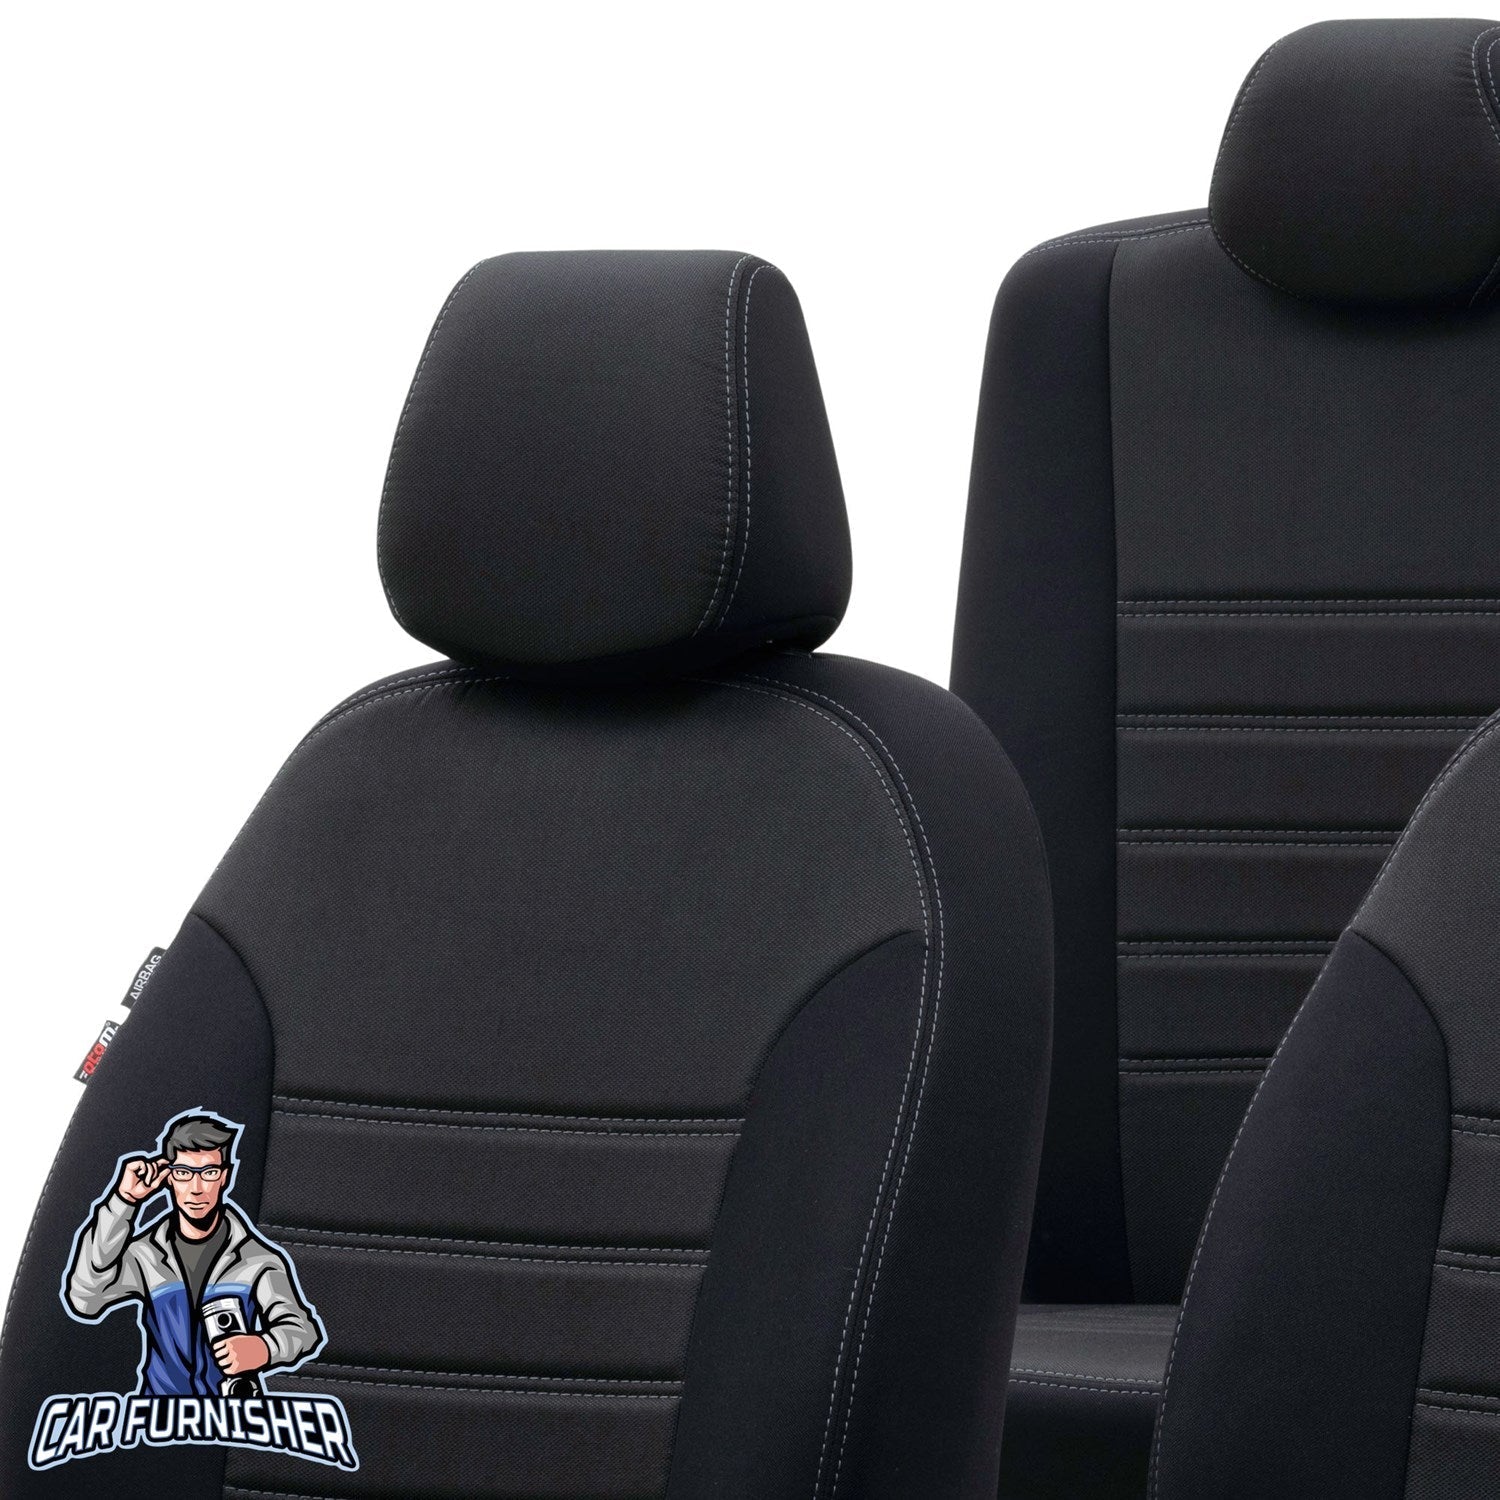 Isuzu L35 Seat Cover Original Jacquard Design Black Jacquard Fabric